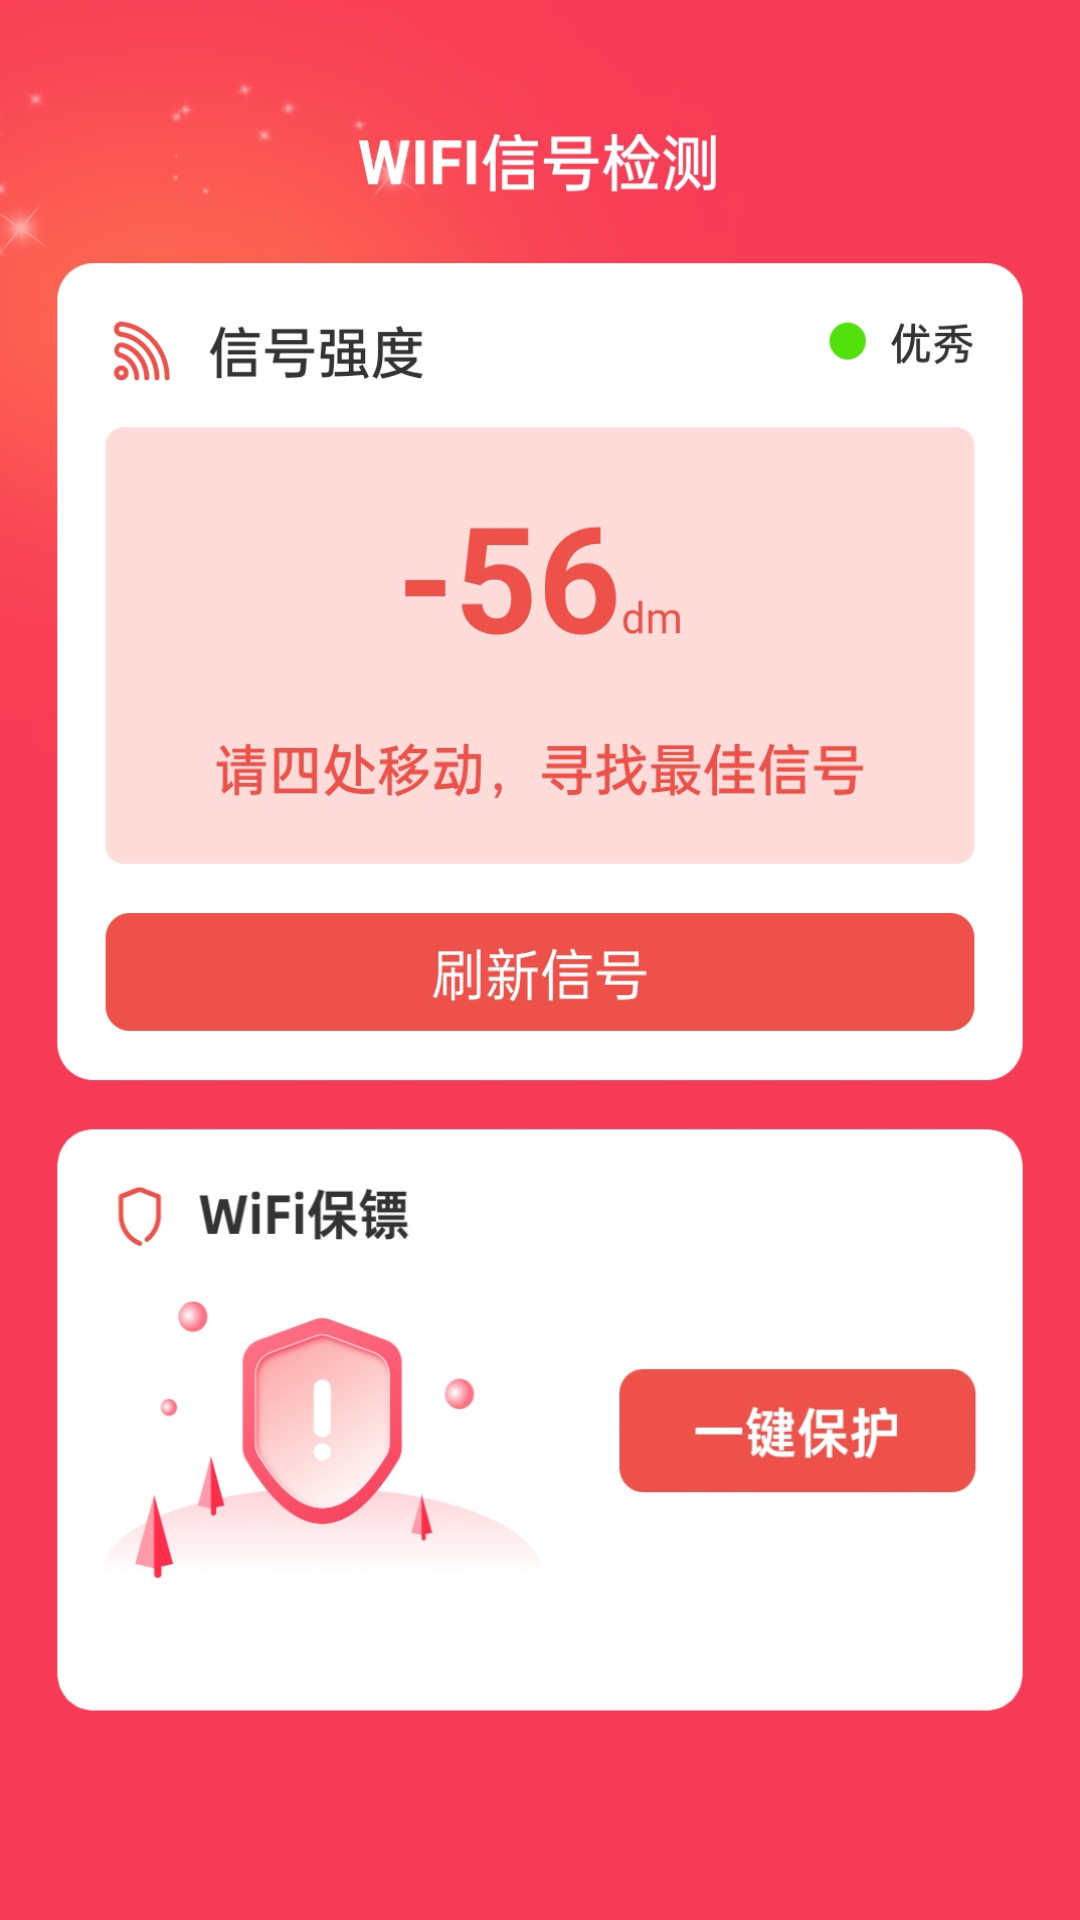 WiFi福运软件官方版图片1